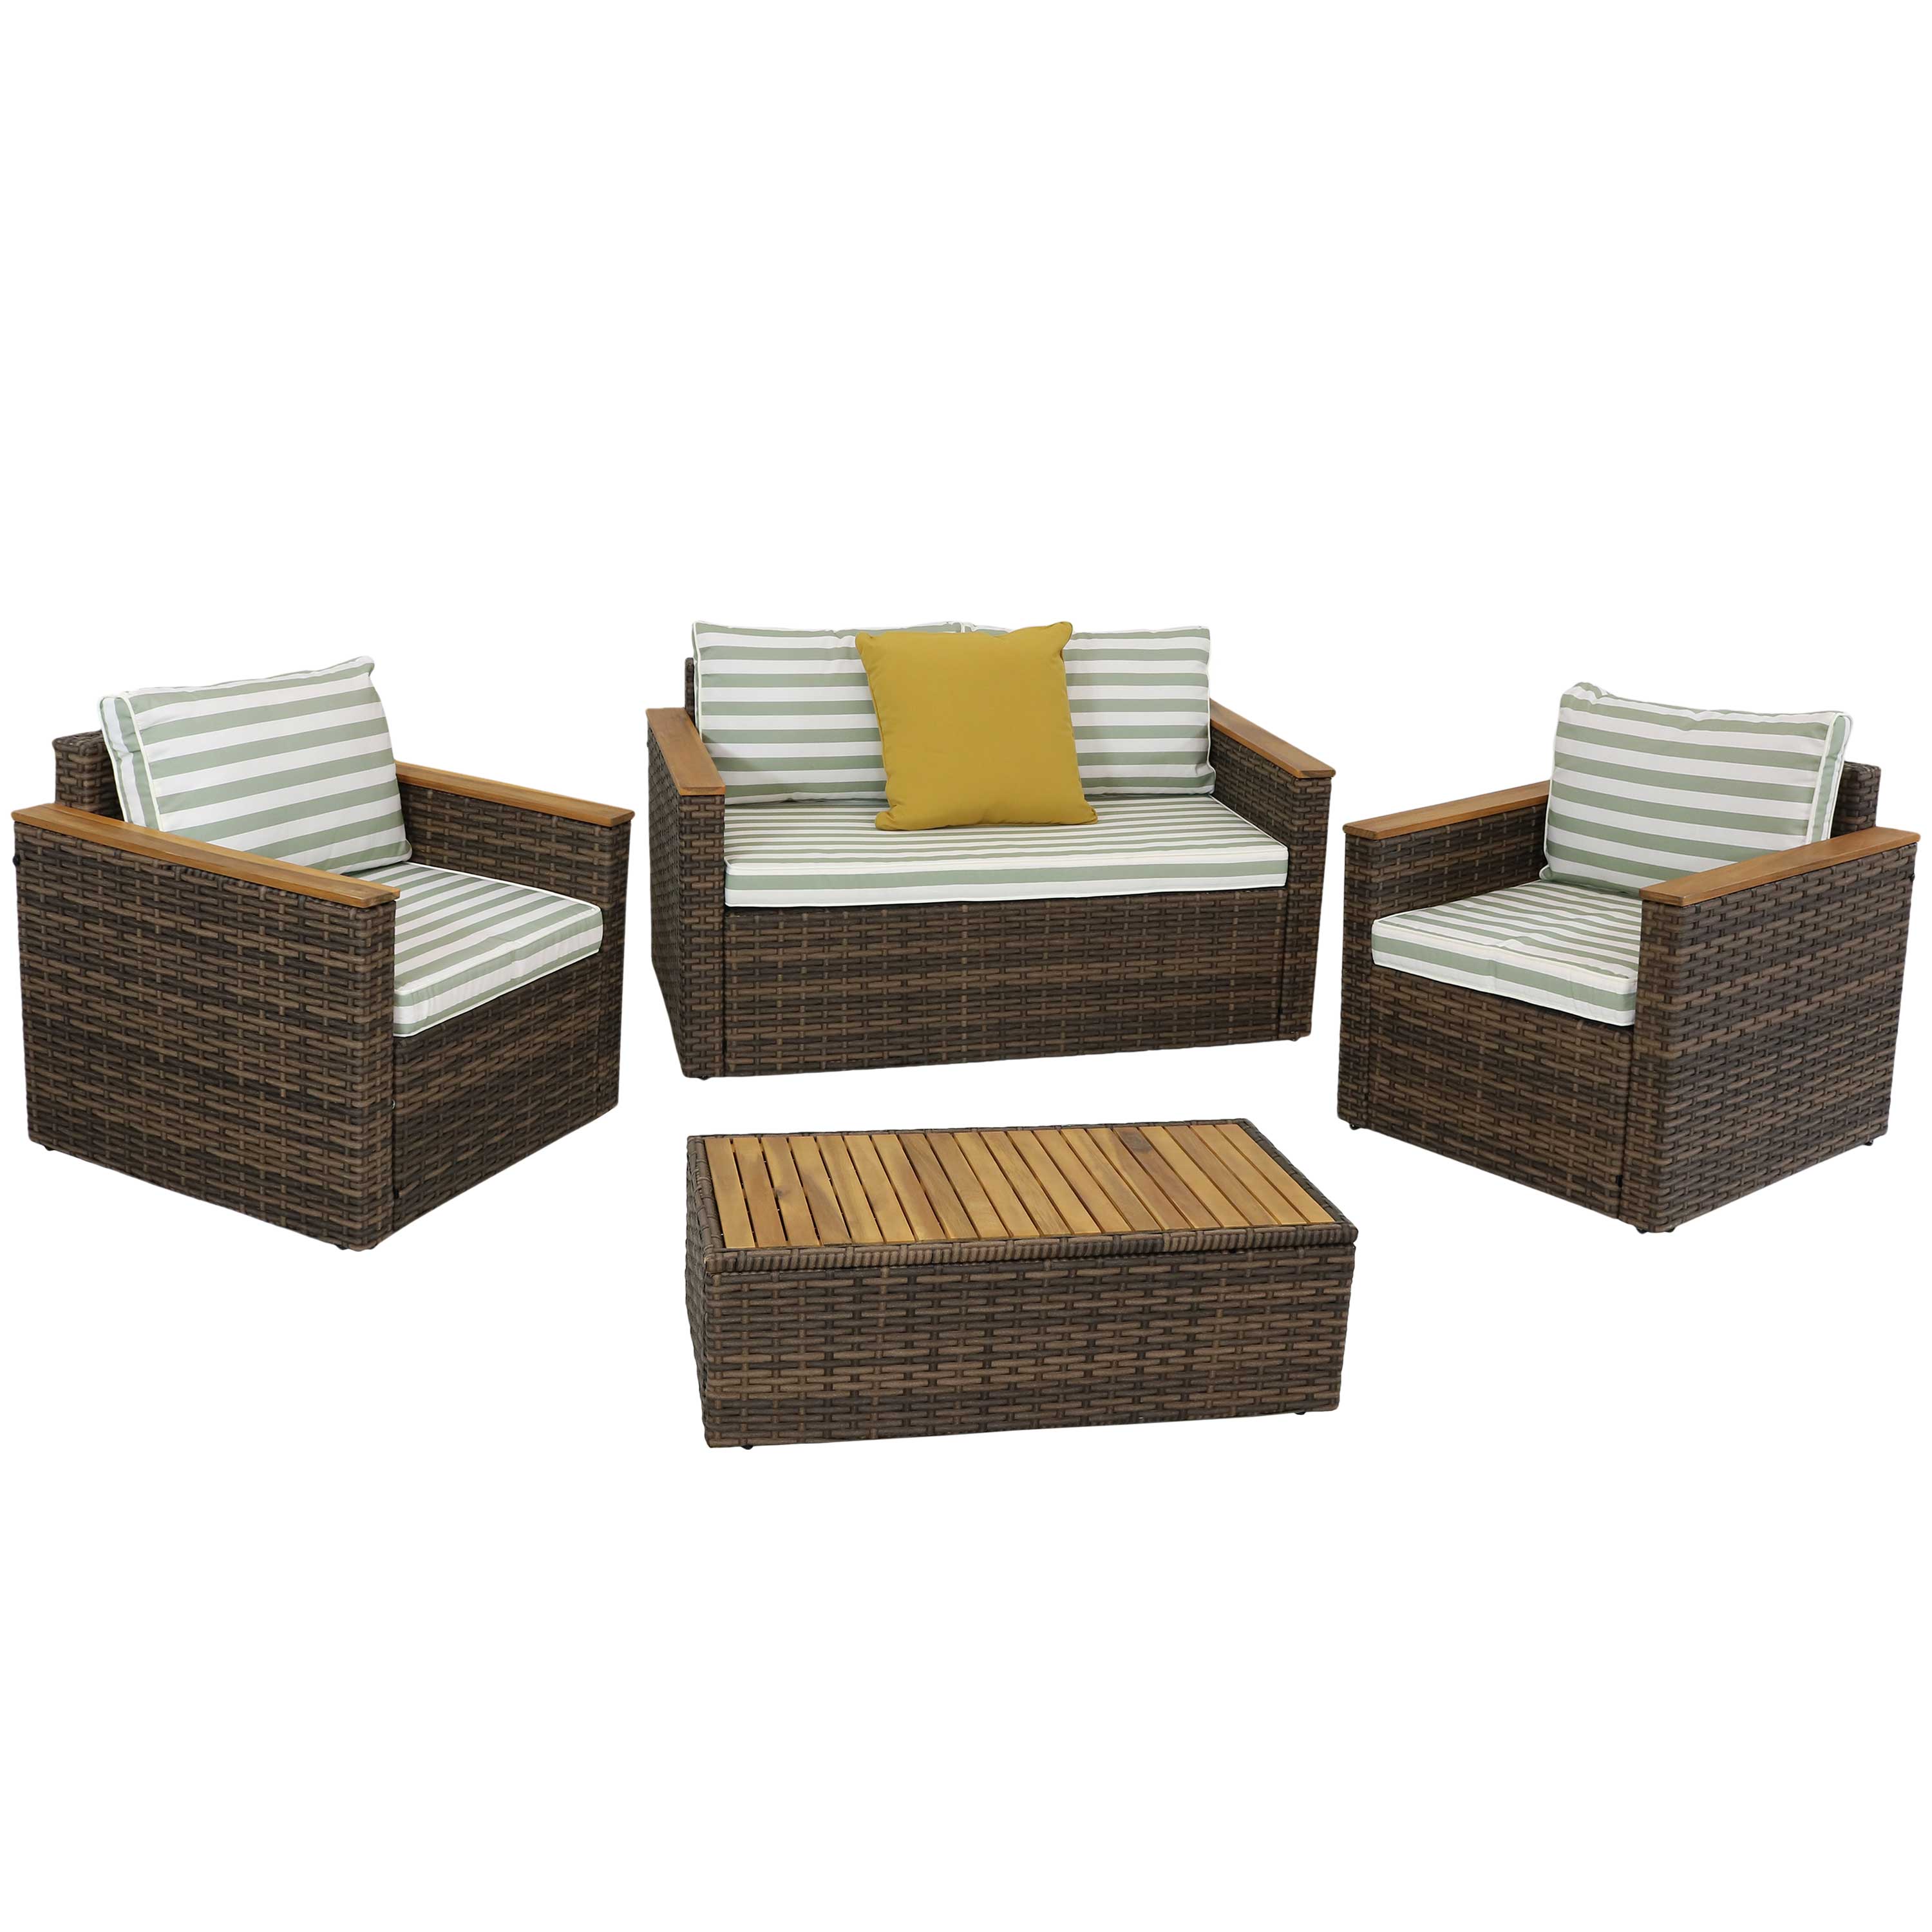 Sunnydaze Kenmare 4-Piece Rattan and Acacia Outdoor Patio Furniture Set